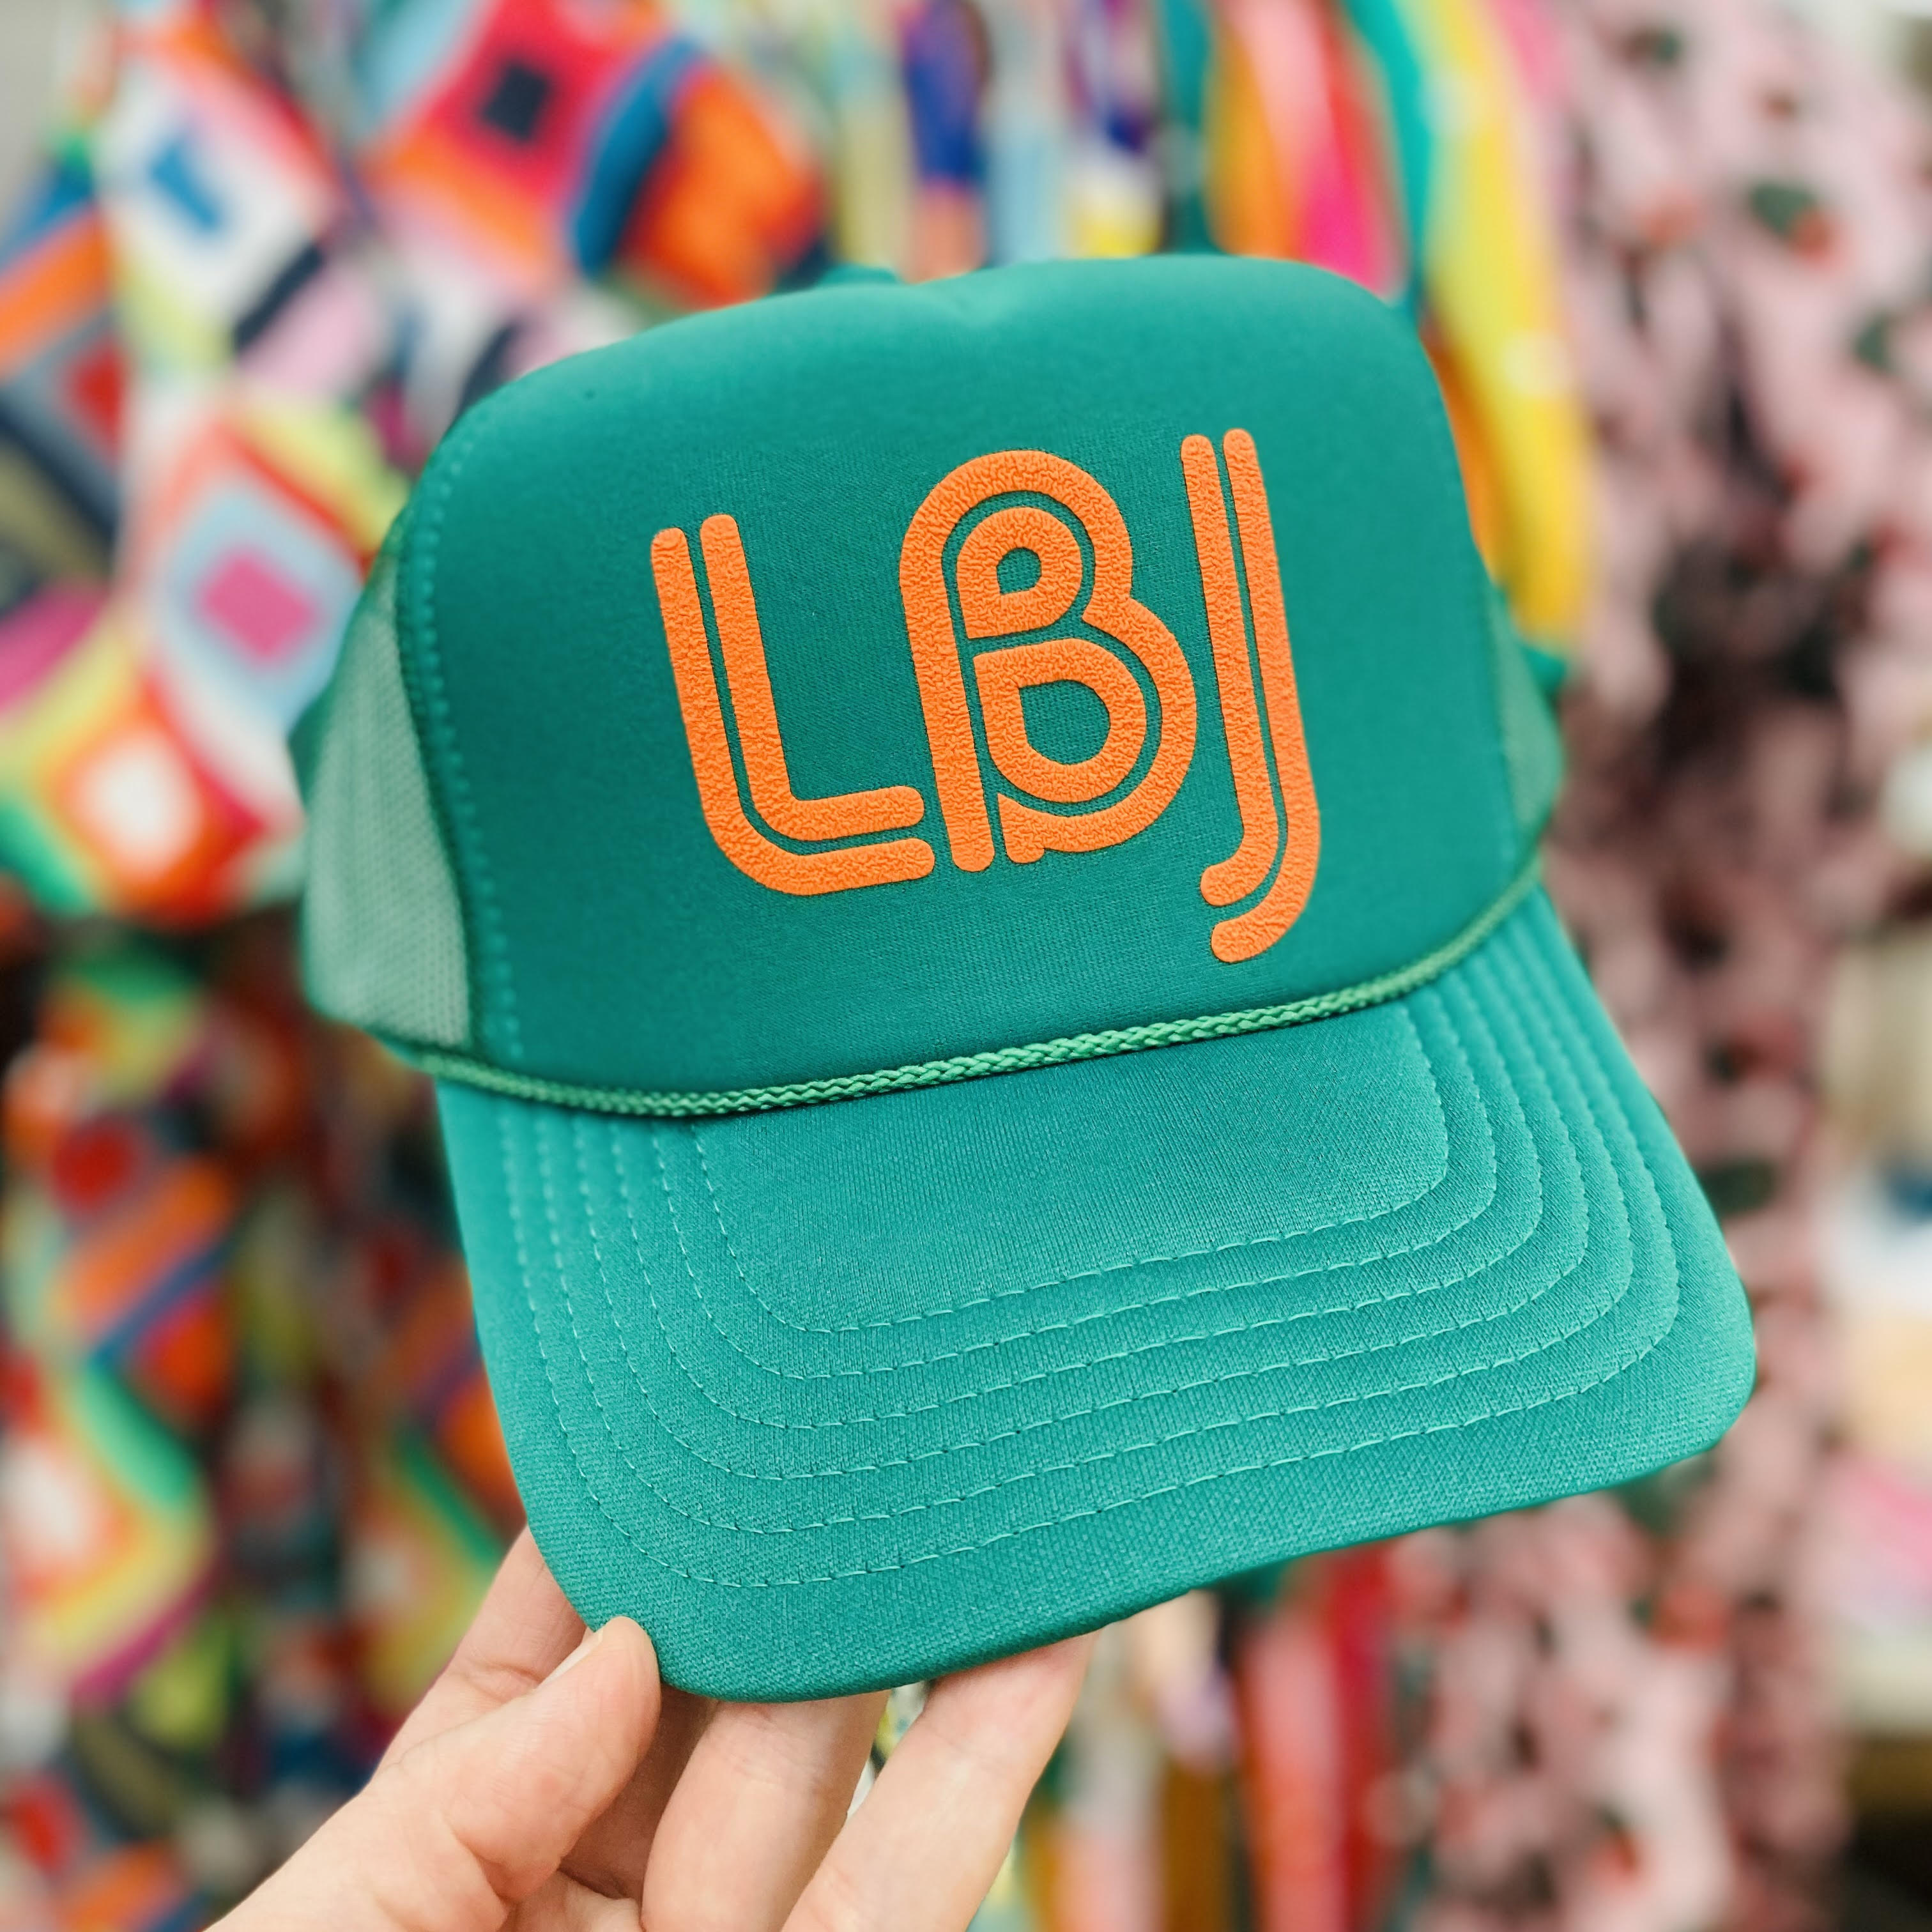 Lake LBJ Trucker Hat